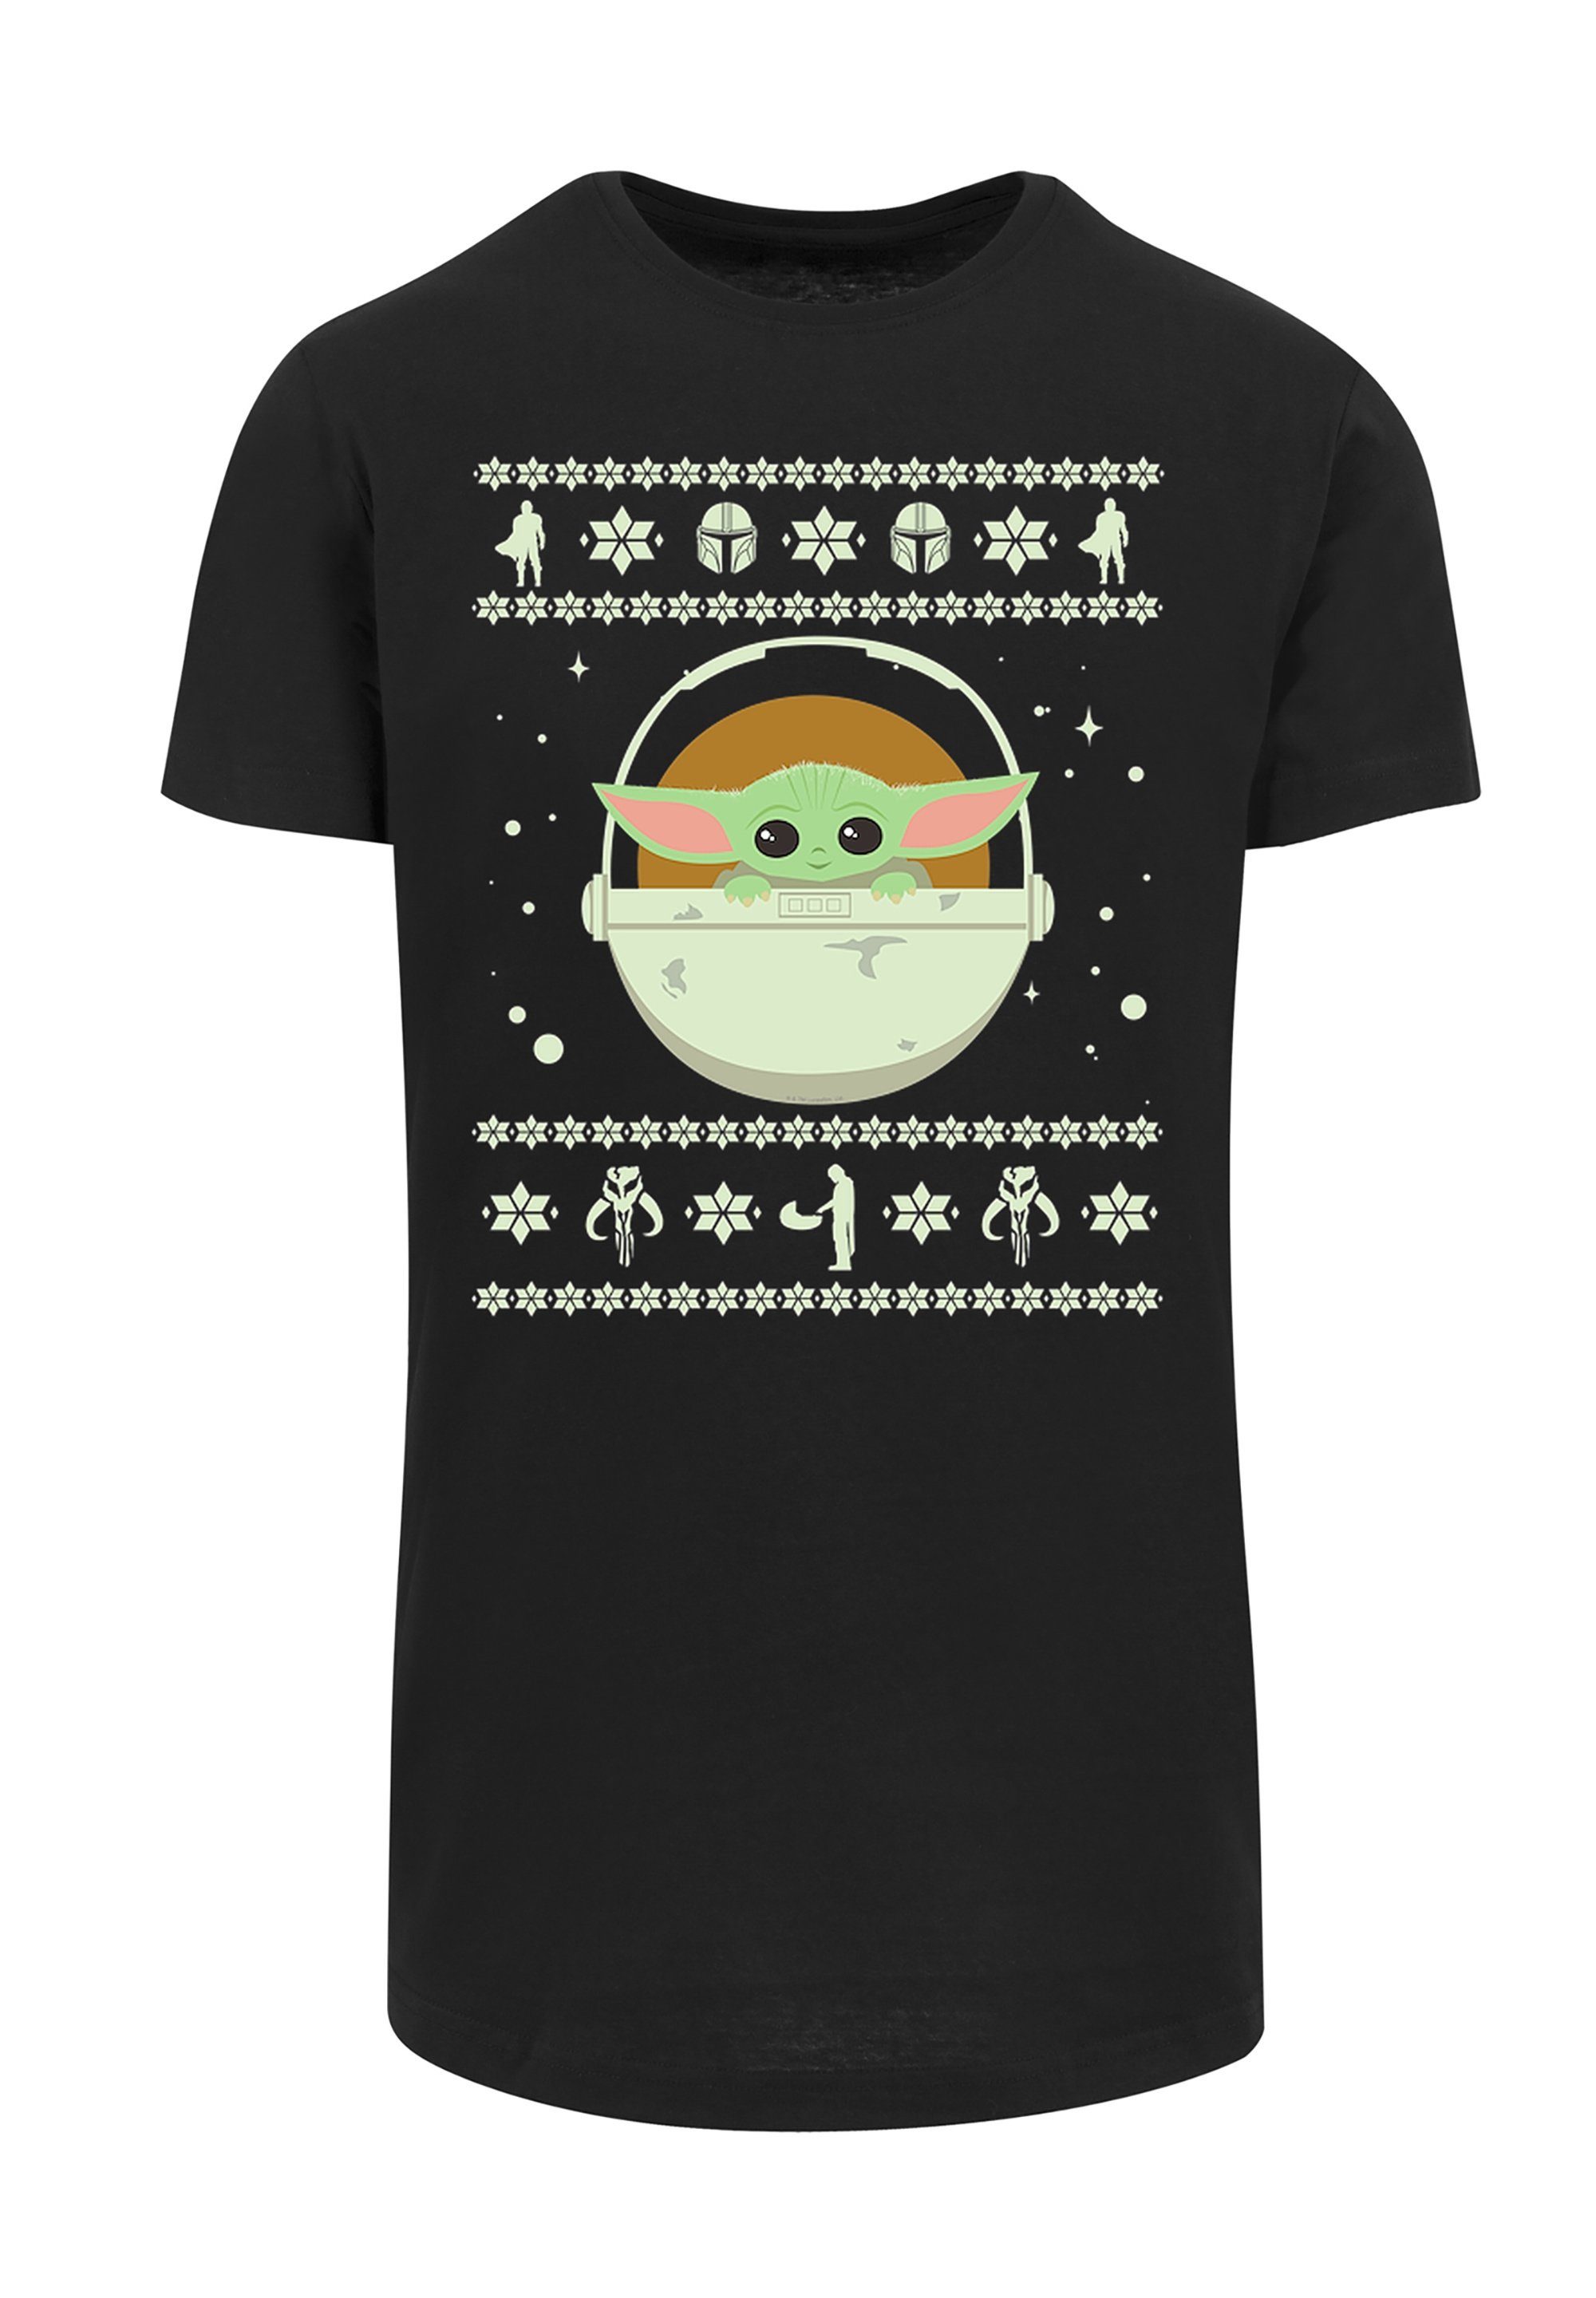 T-Shirt Baby Star Print The Yoda Wars F4NT4STIC Mandalorian